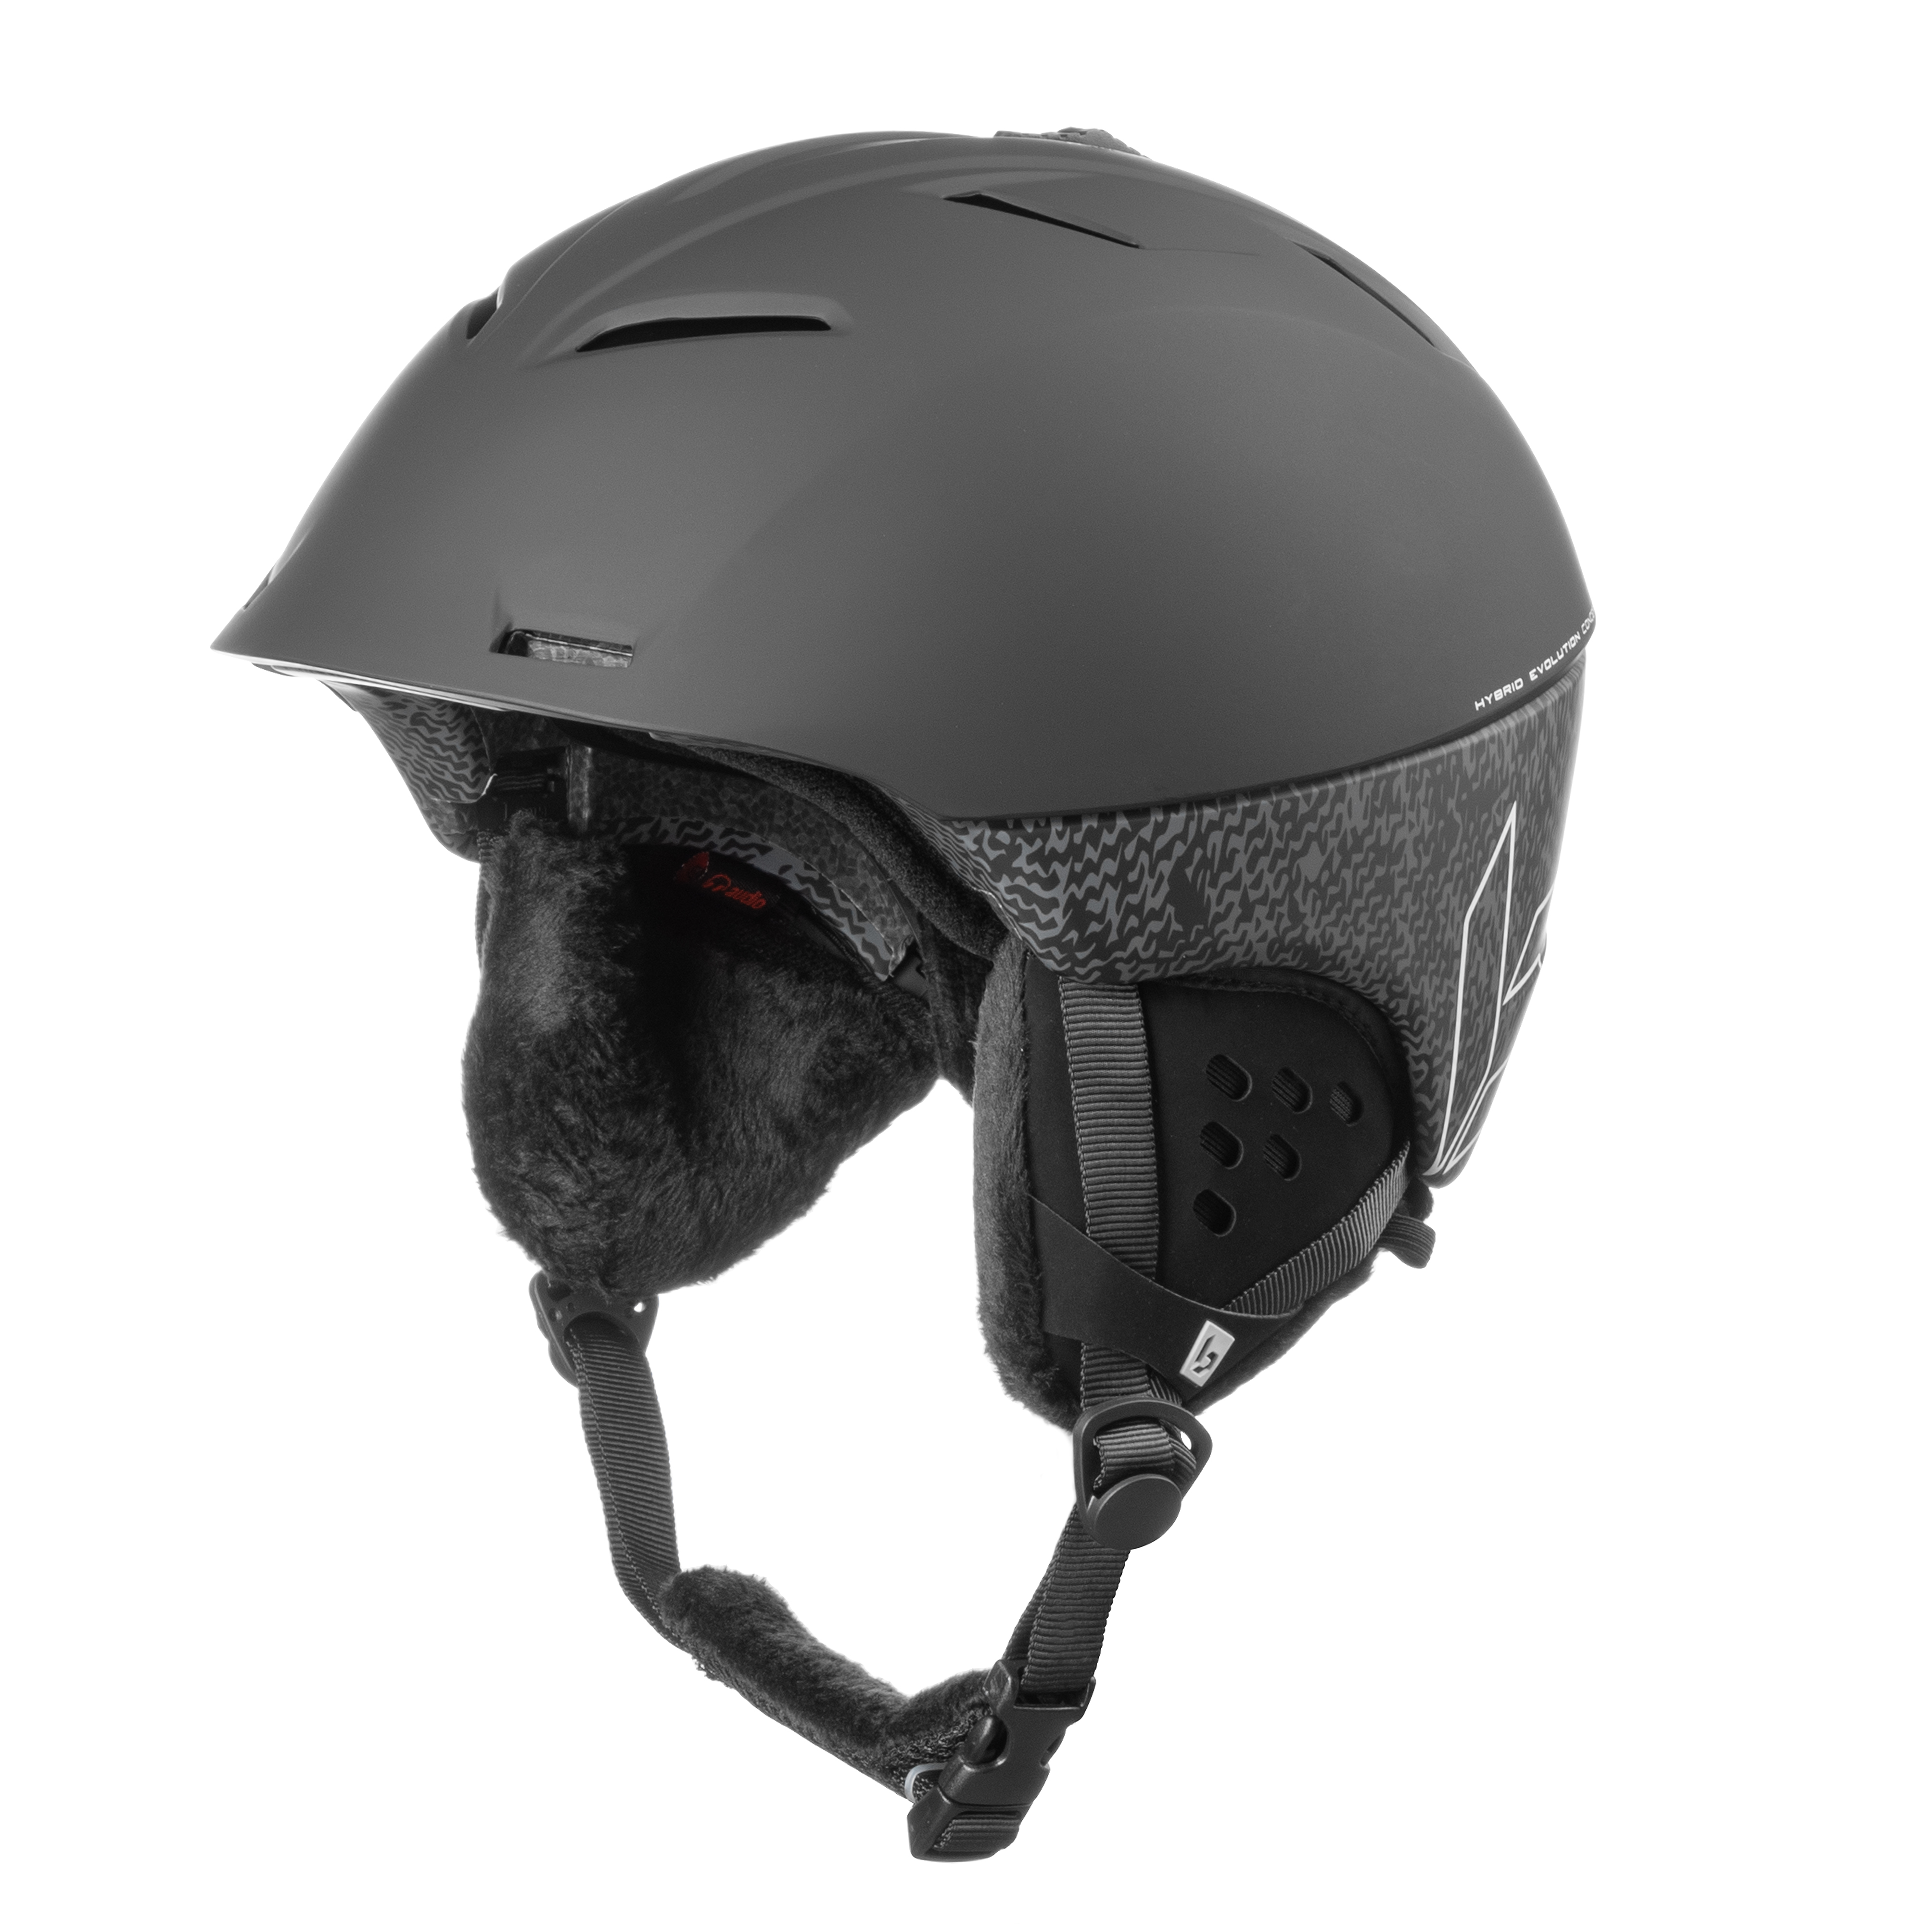 Характеристики шлем для сноубординга Bolle SYNERGY Black Matte (M)